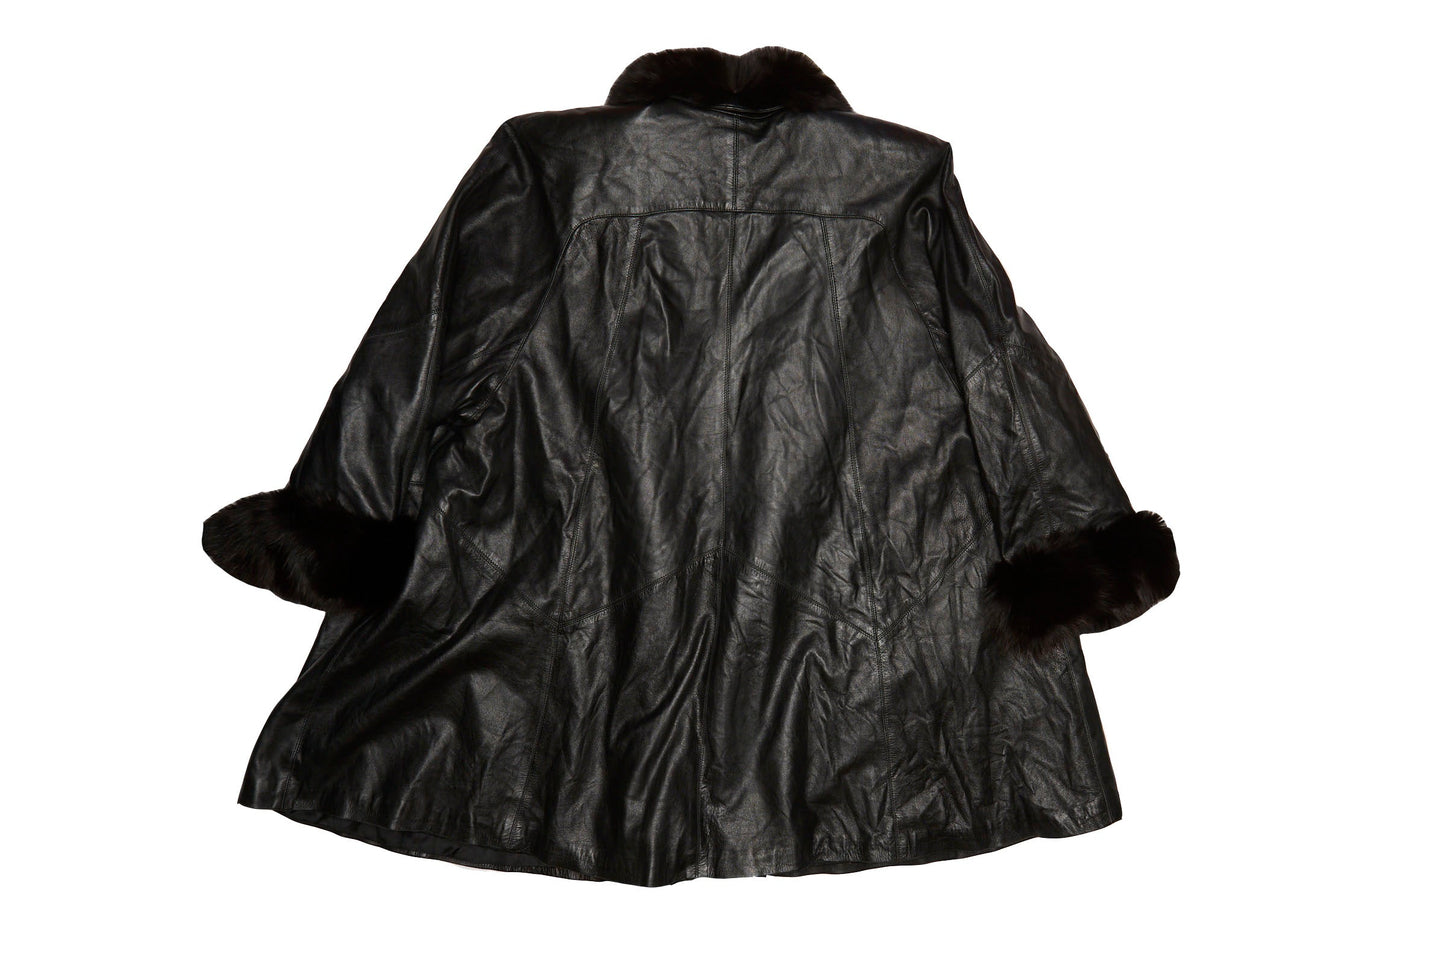 Womens Conbipel Fur Leather Jacket - M